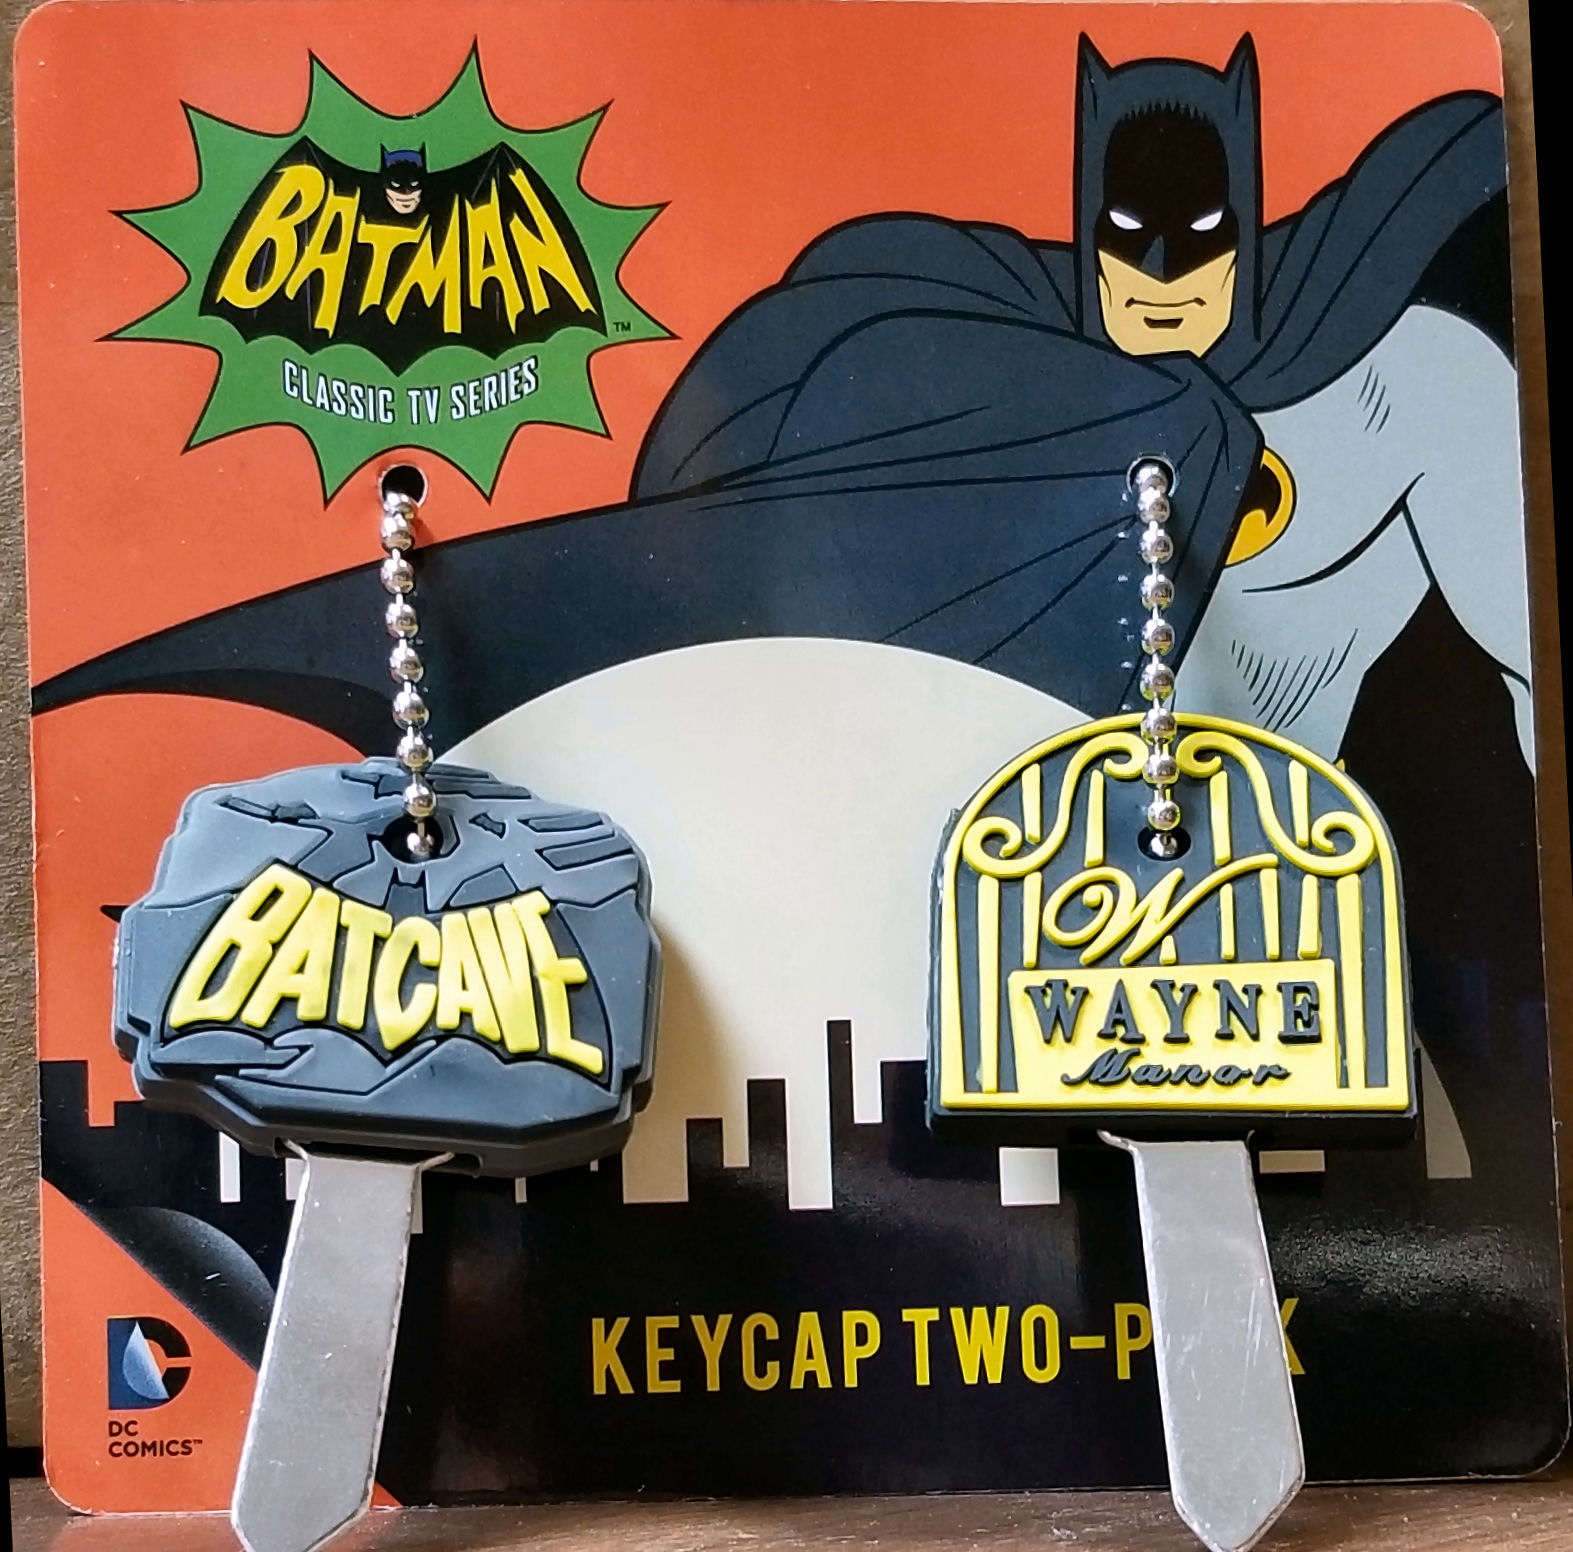 Batcave and Wayne Manor KeyCaps